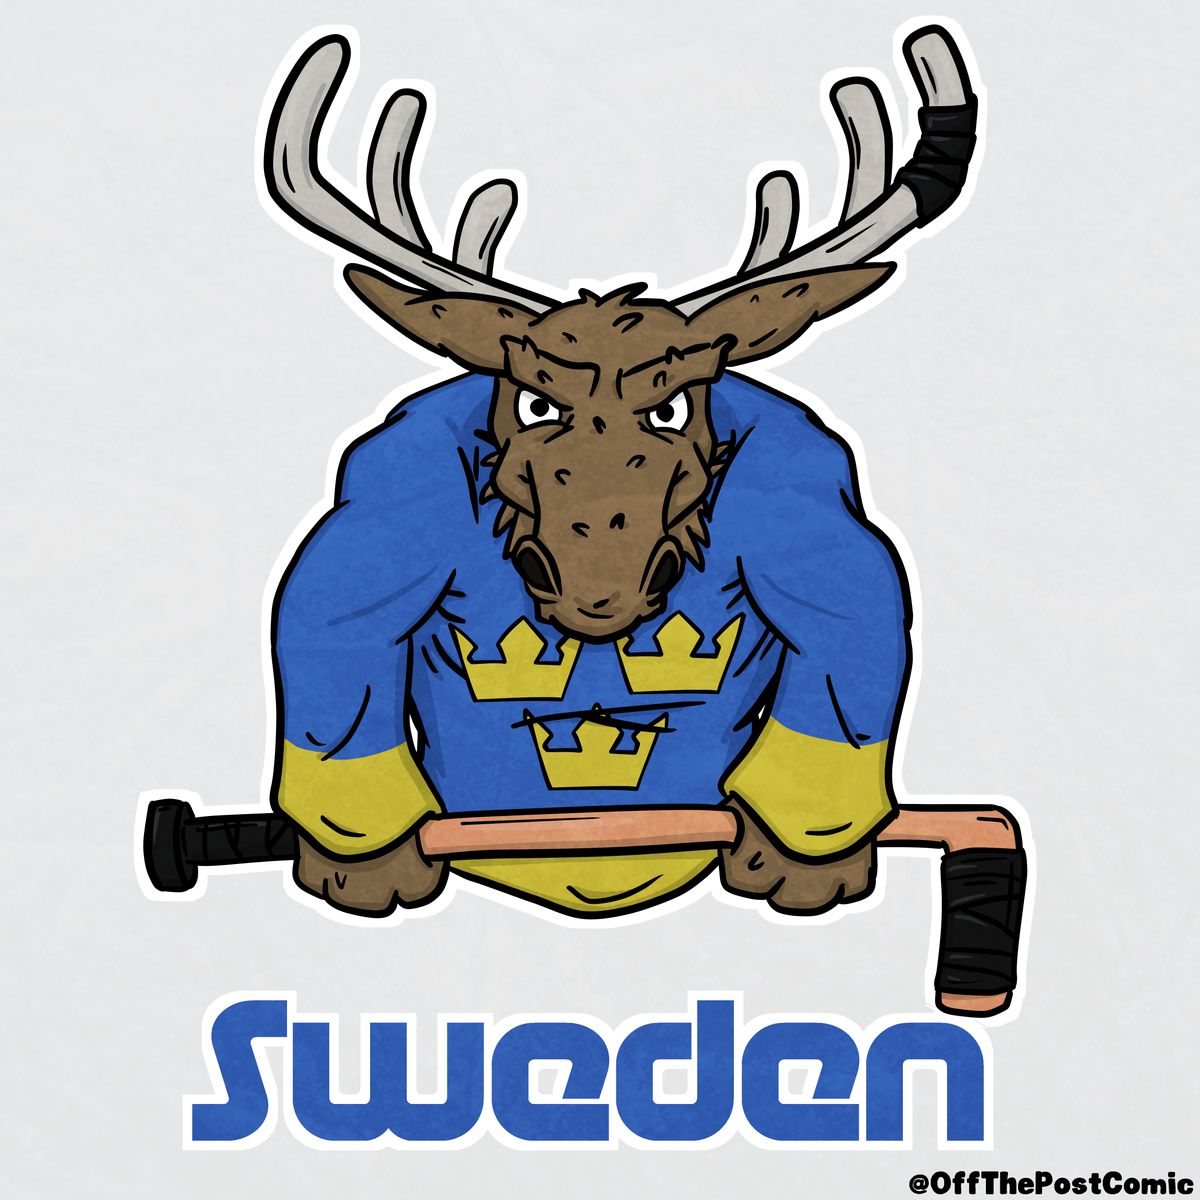 Team Sweden